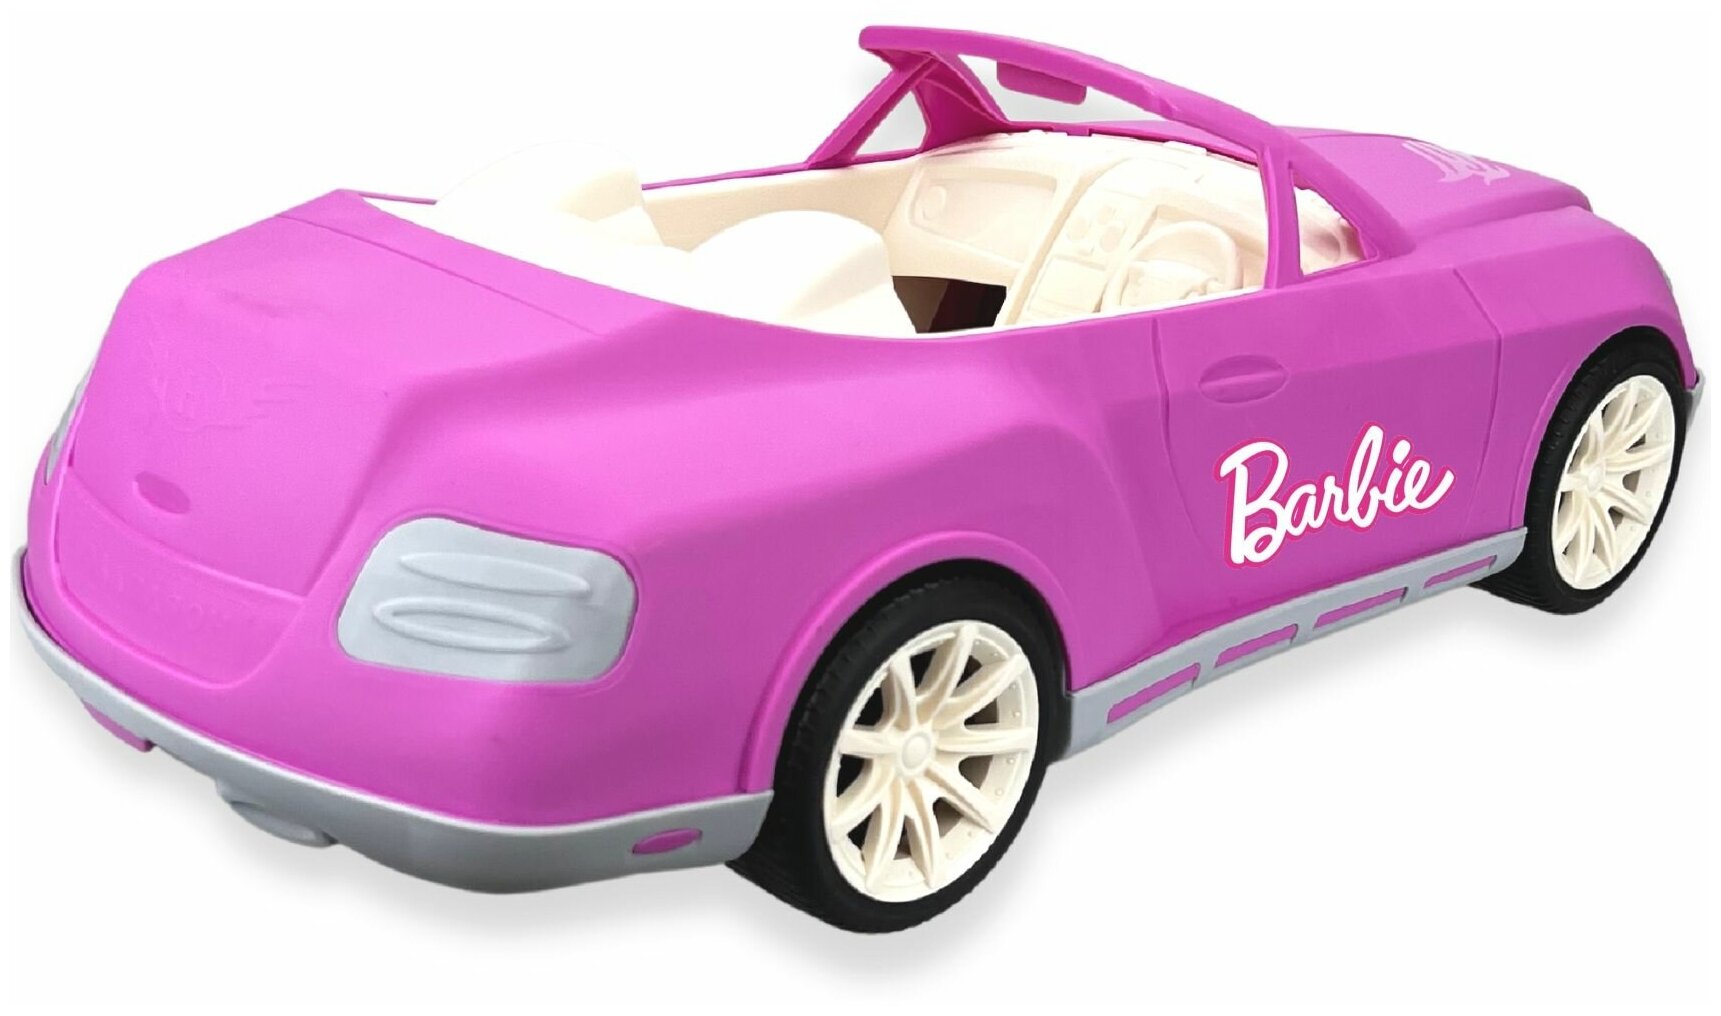 Машинка для куклы, Кабриолет Нимфа в коробке , розовая , размер машины - 42 х 19,5 х 15 см